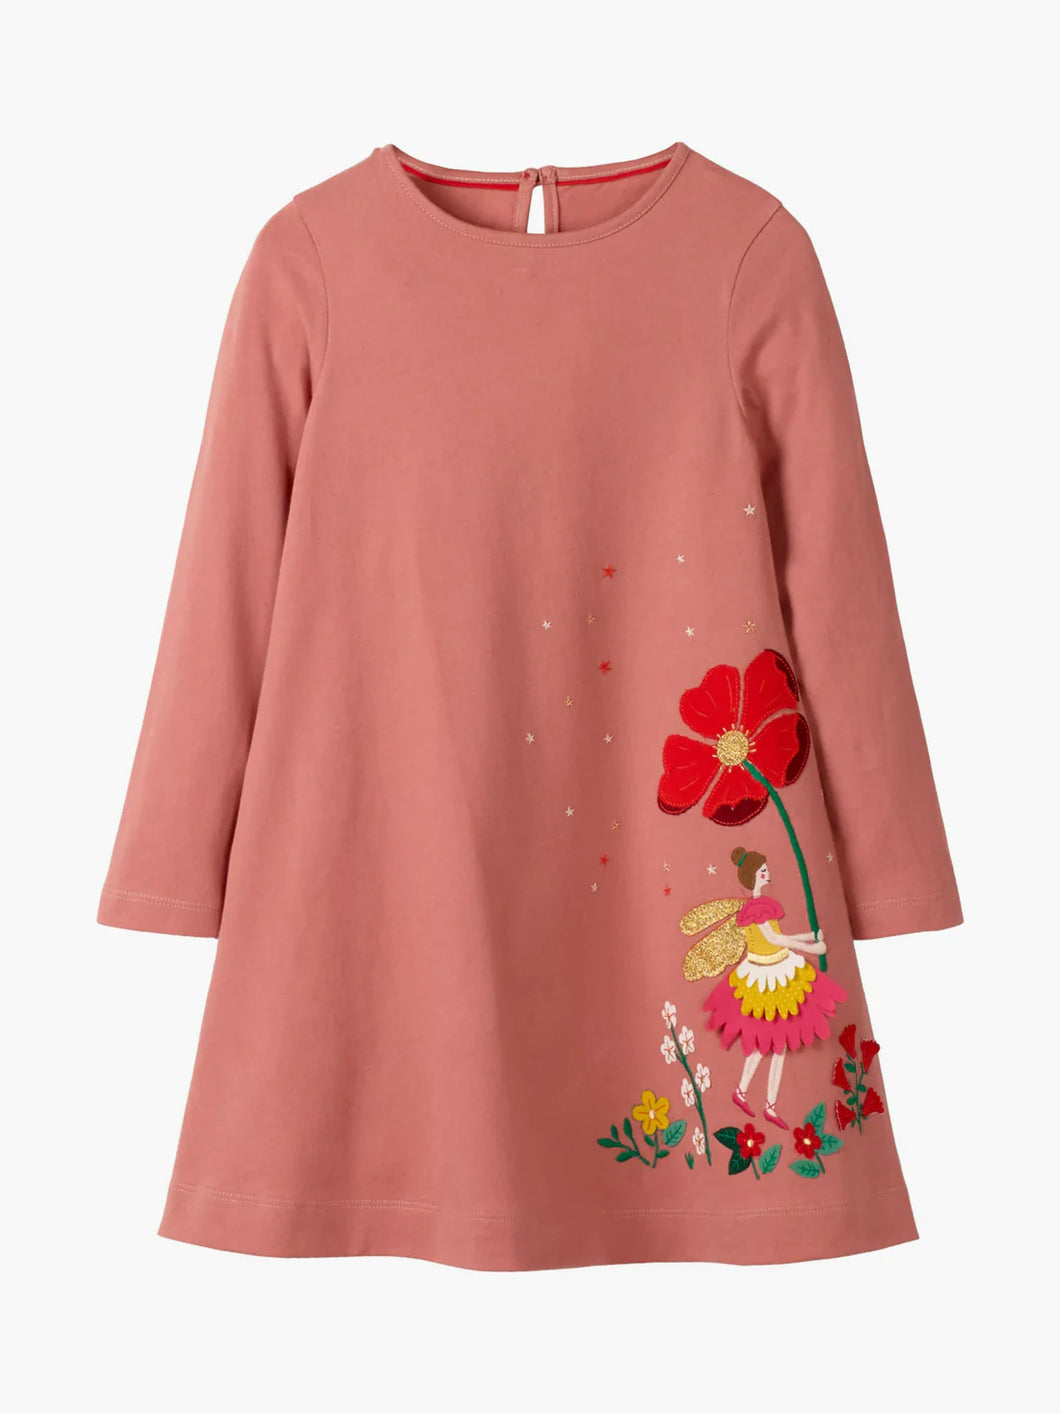 NWOT Mini Boden Fairy Applique Jersey Dress